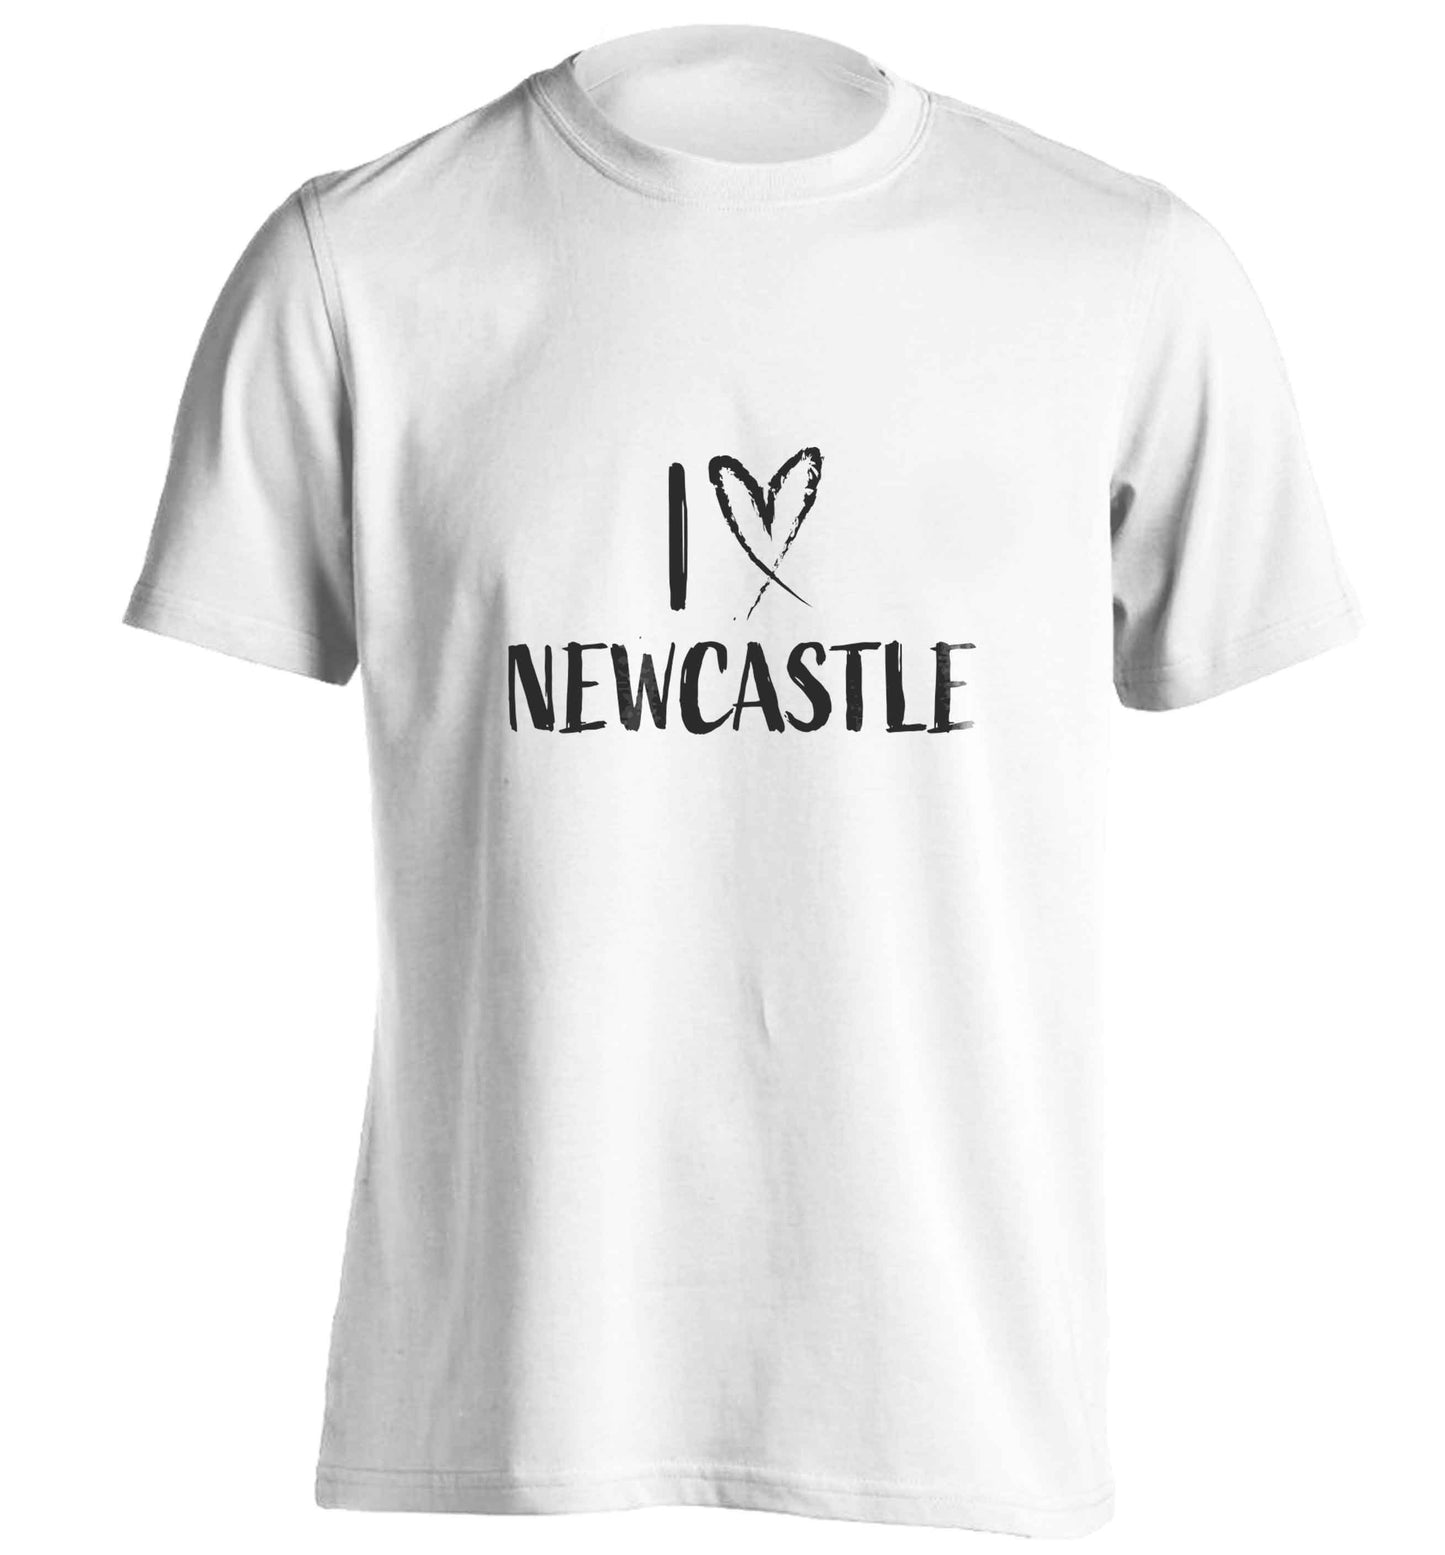 I love Newcastle adults unisex white Tshirt 2XL